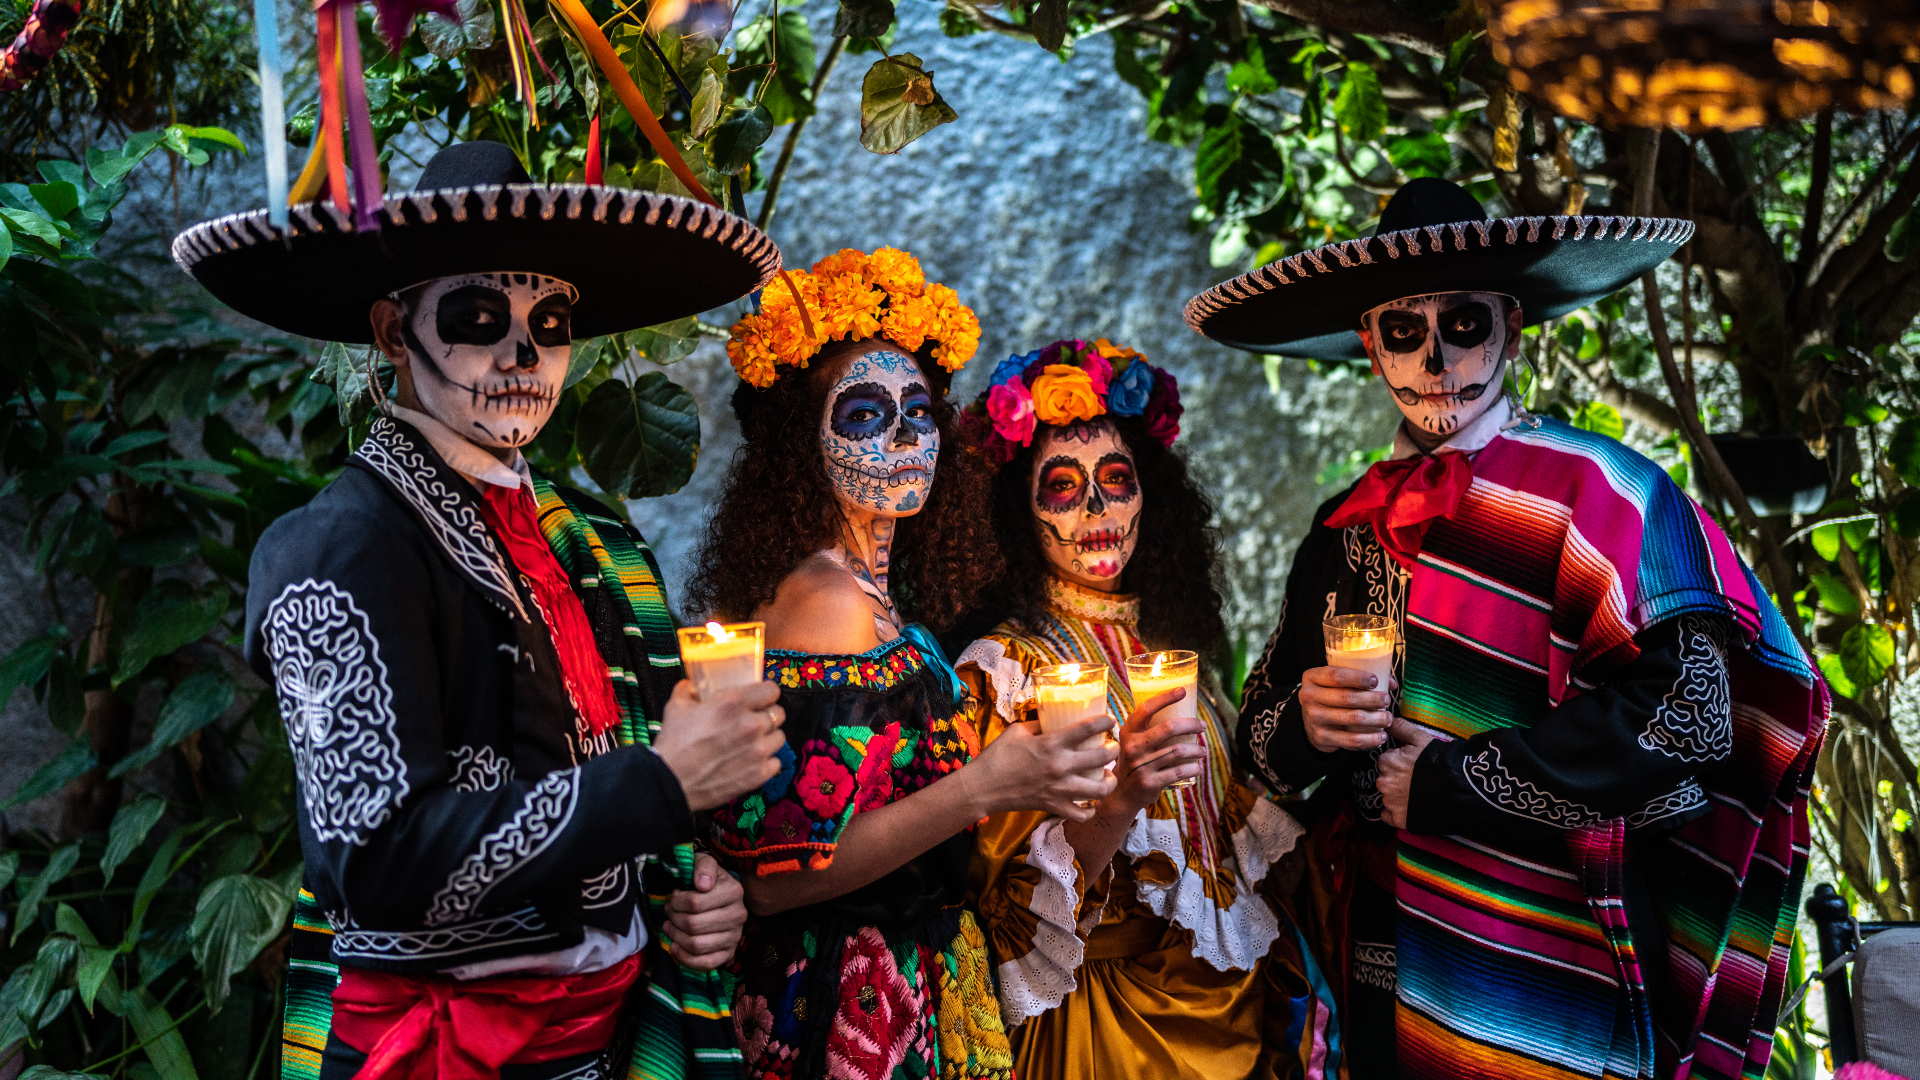 People dressed up for Dia de los Muertos